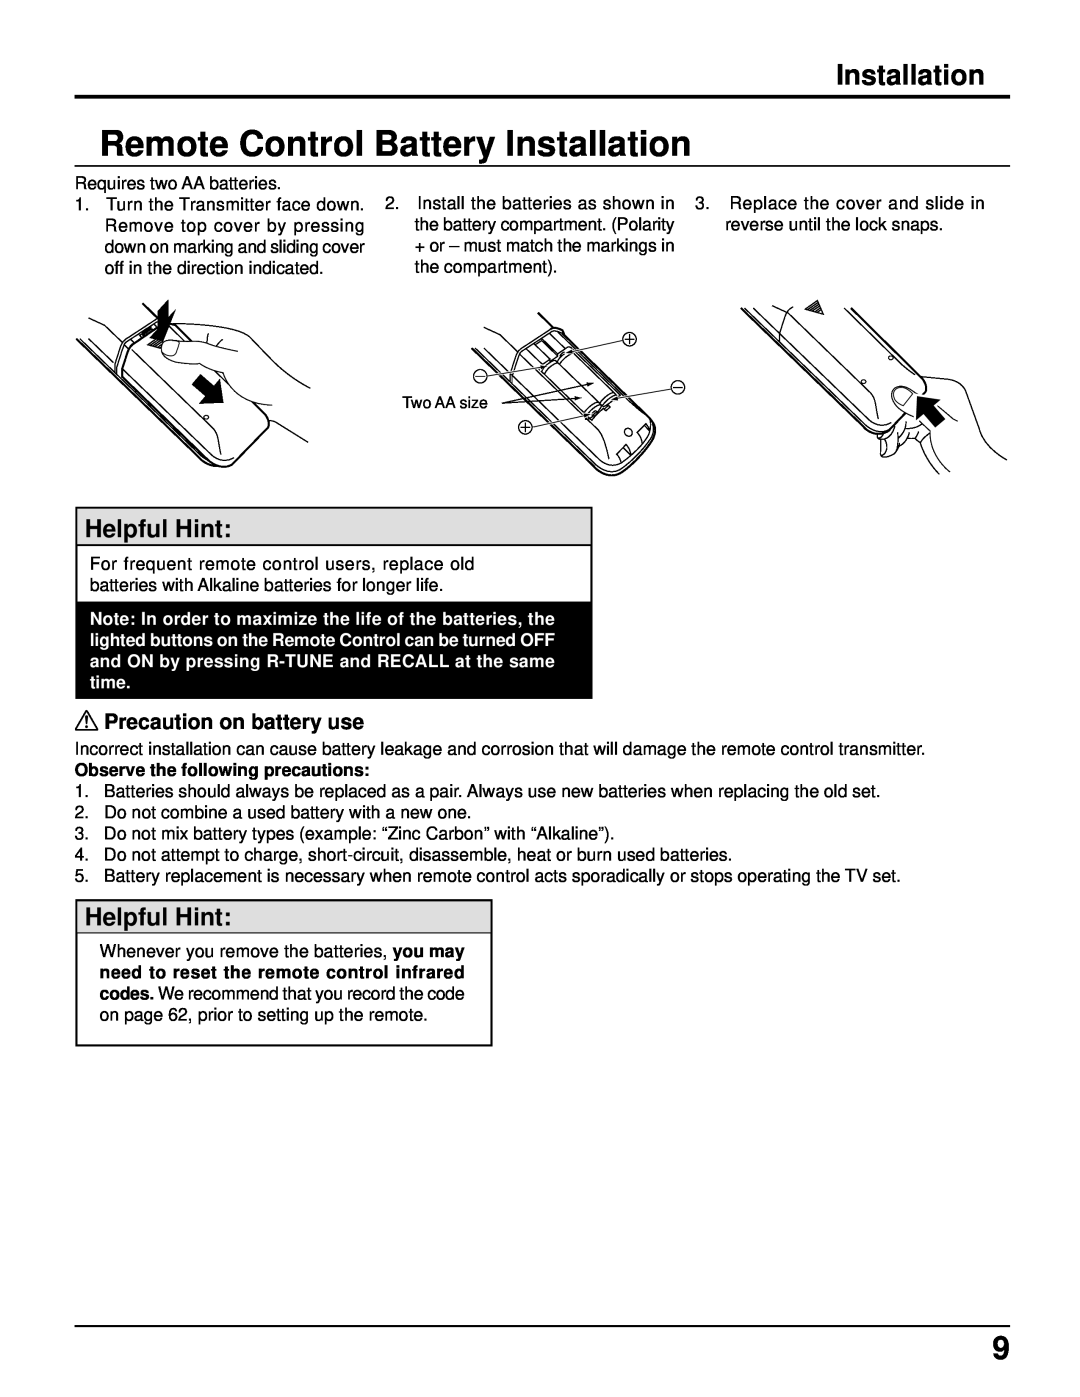 Panasonic CT 34WX50 manual Remote Control Battery Installation, Precaution on battery use, Helpful Hint 